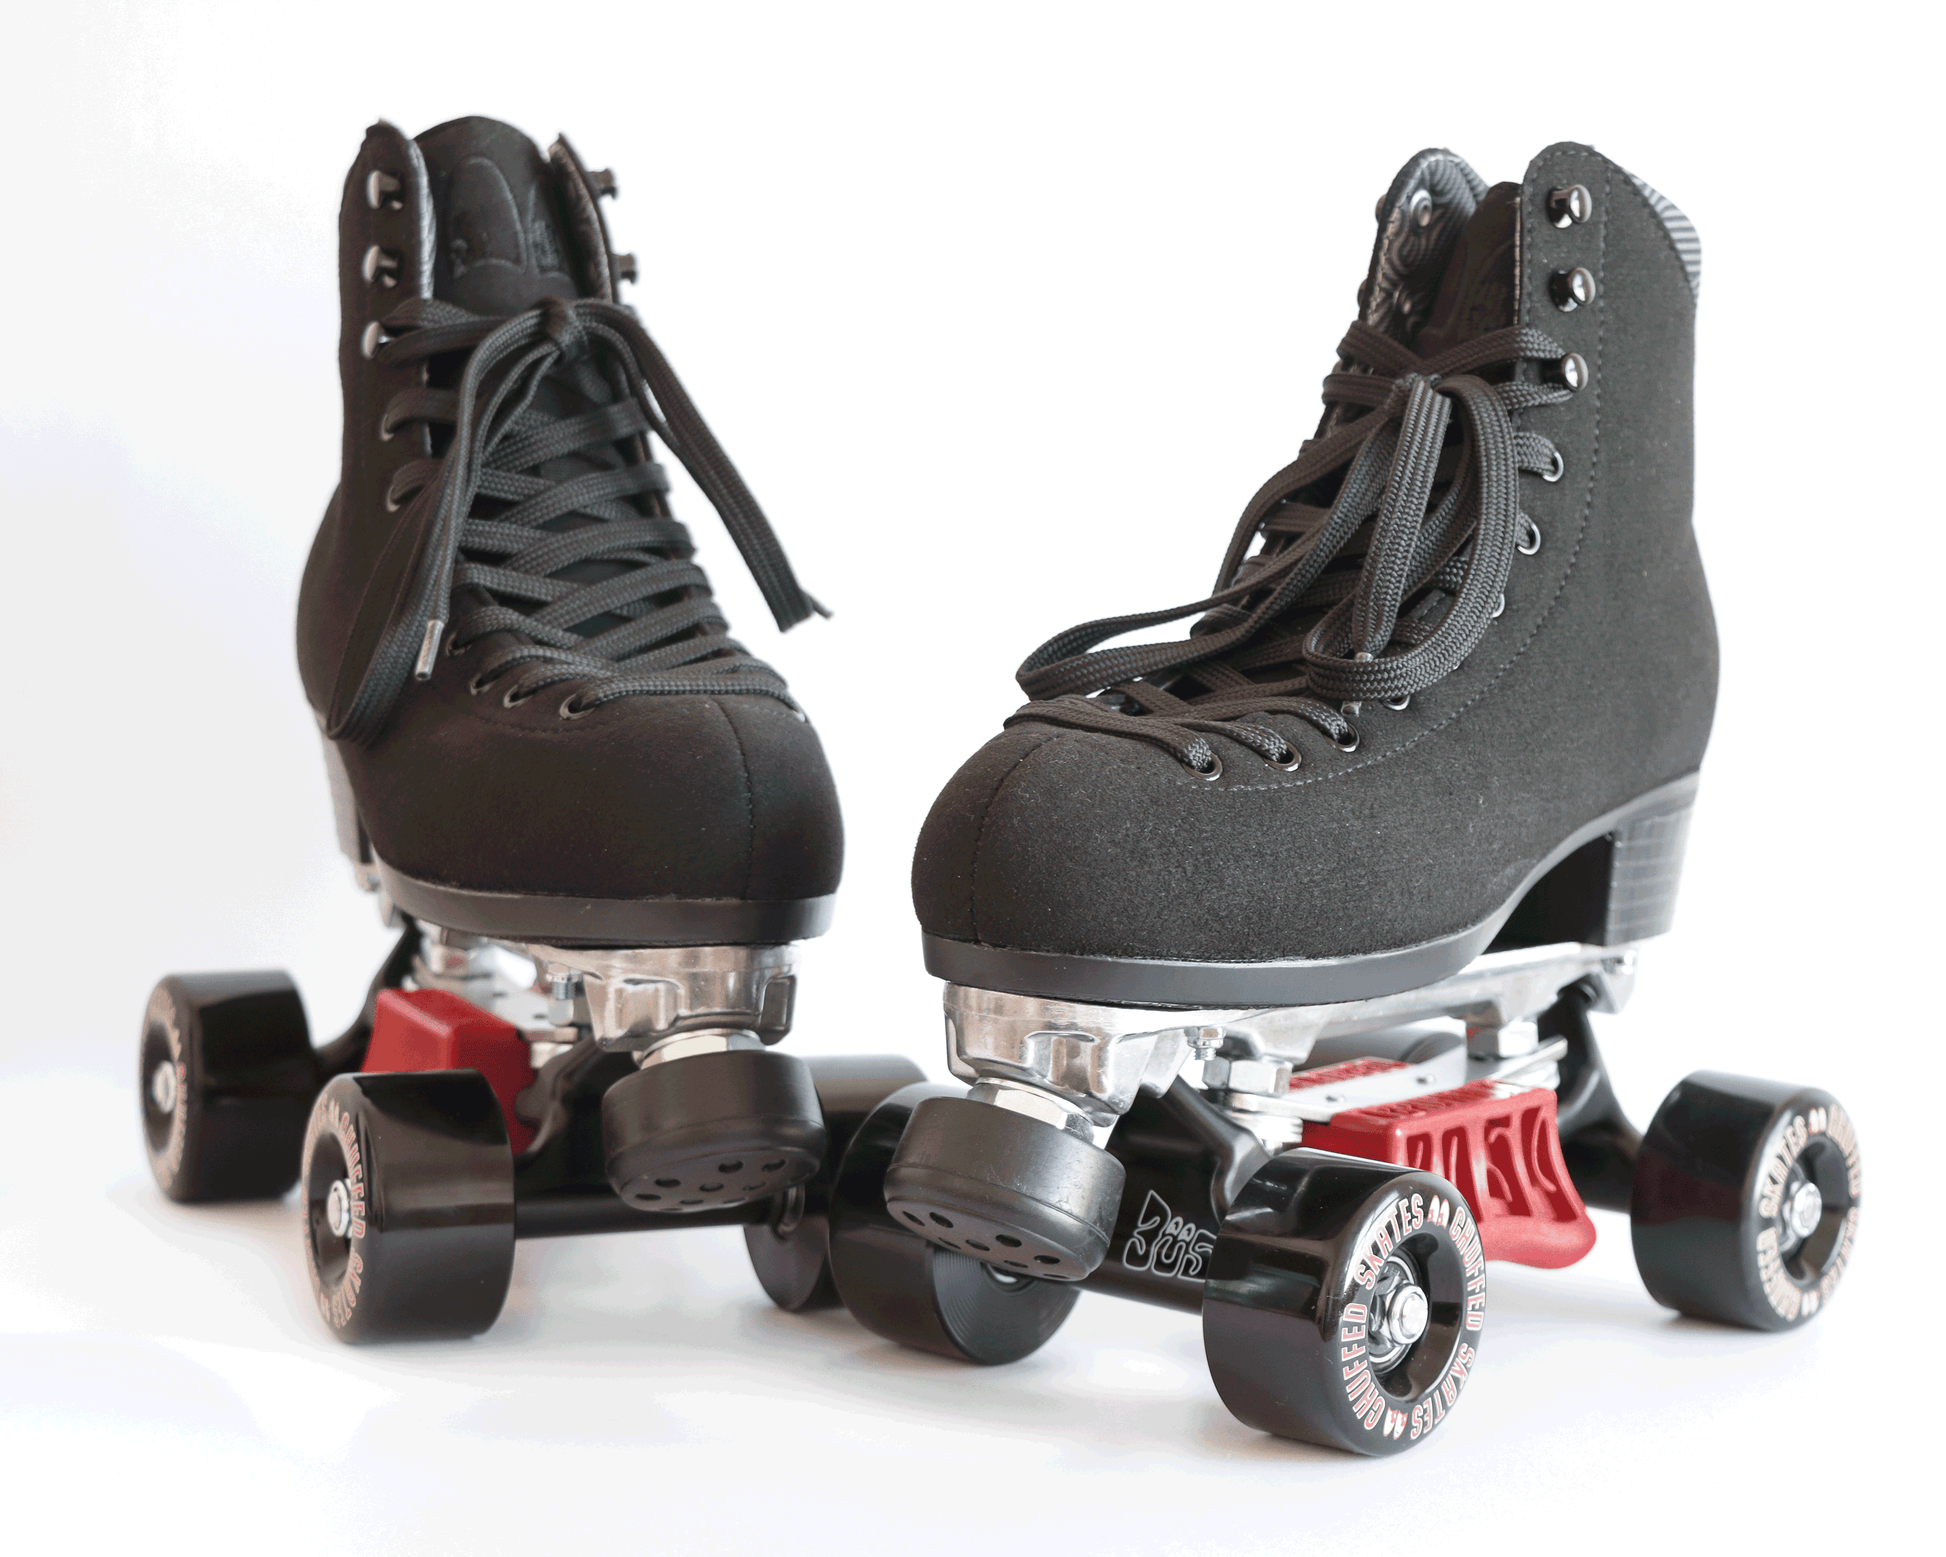 black vegan skates with Chuffed Skates x Brunny hardcore chuffedcore 2.5inch trucks